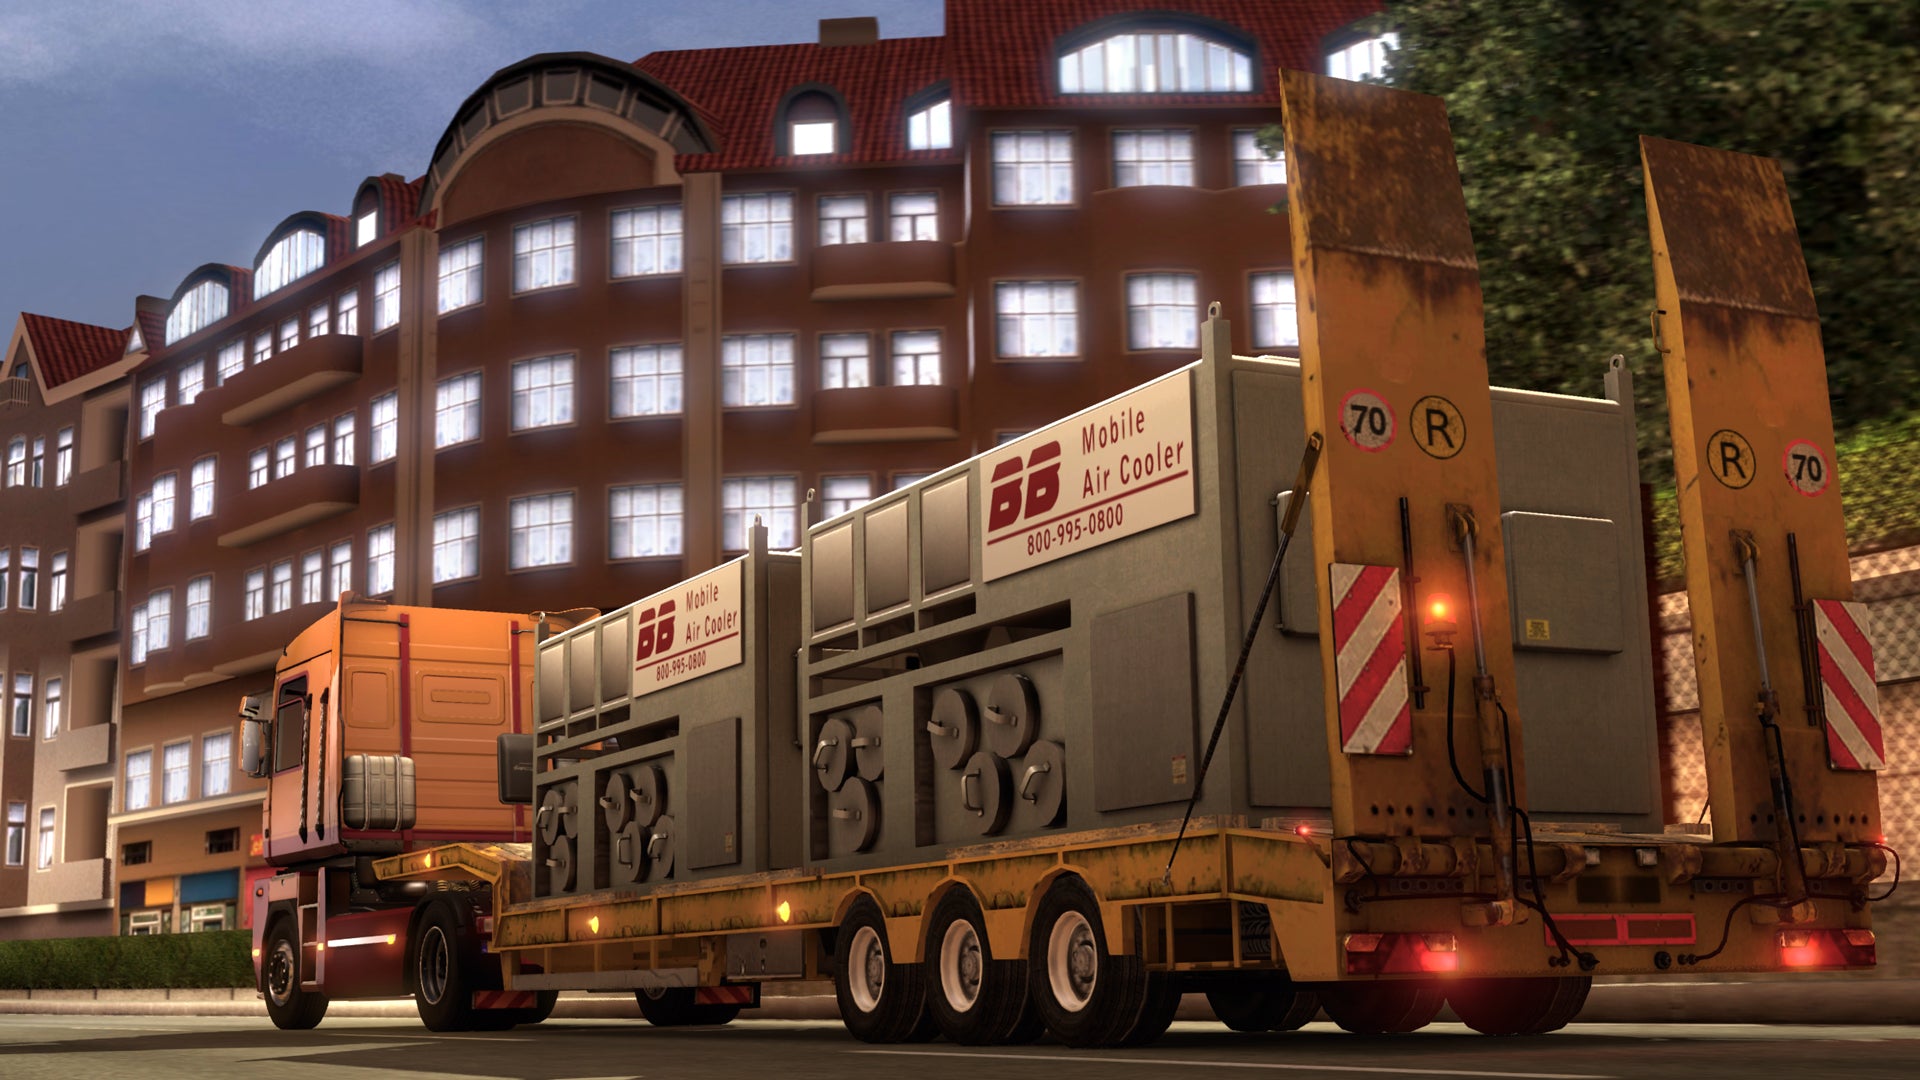 Buy Heavy Cargo The Truck Simulator PS4 Compare Prices